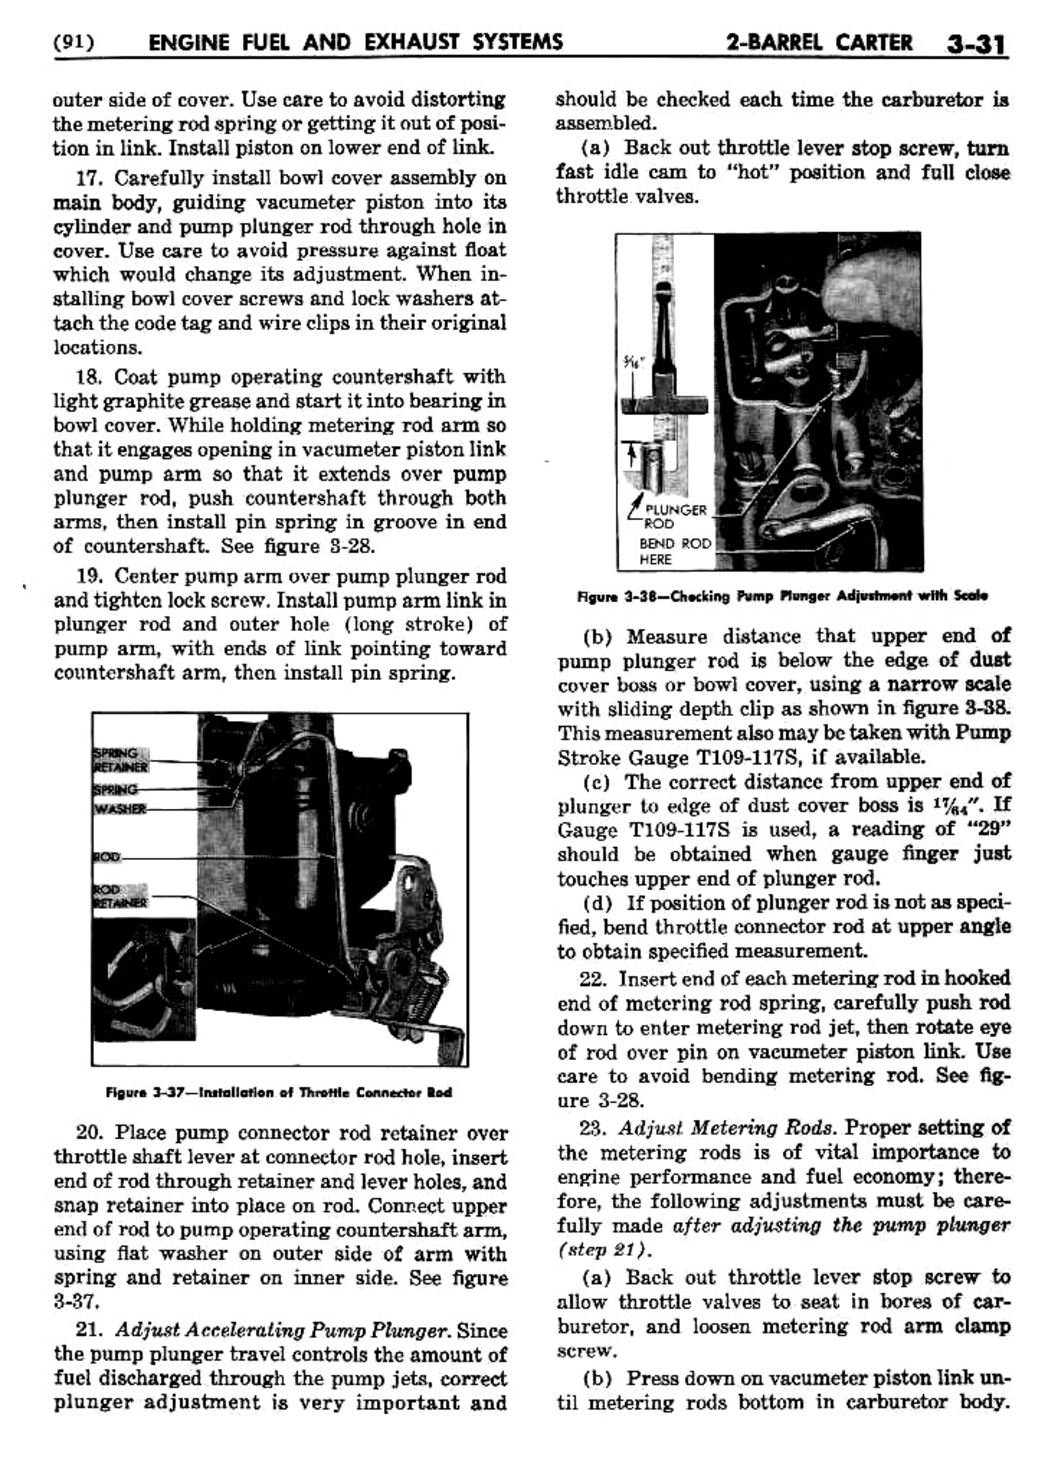 n_04 1955 Buick Shop Manual - Engine Fuel & Exhaust-031-031.jpg